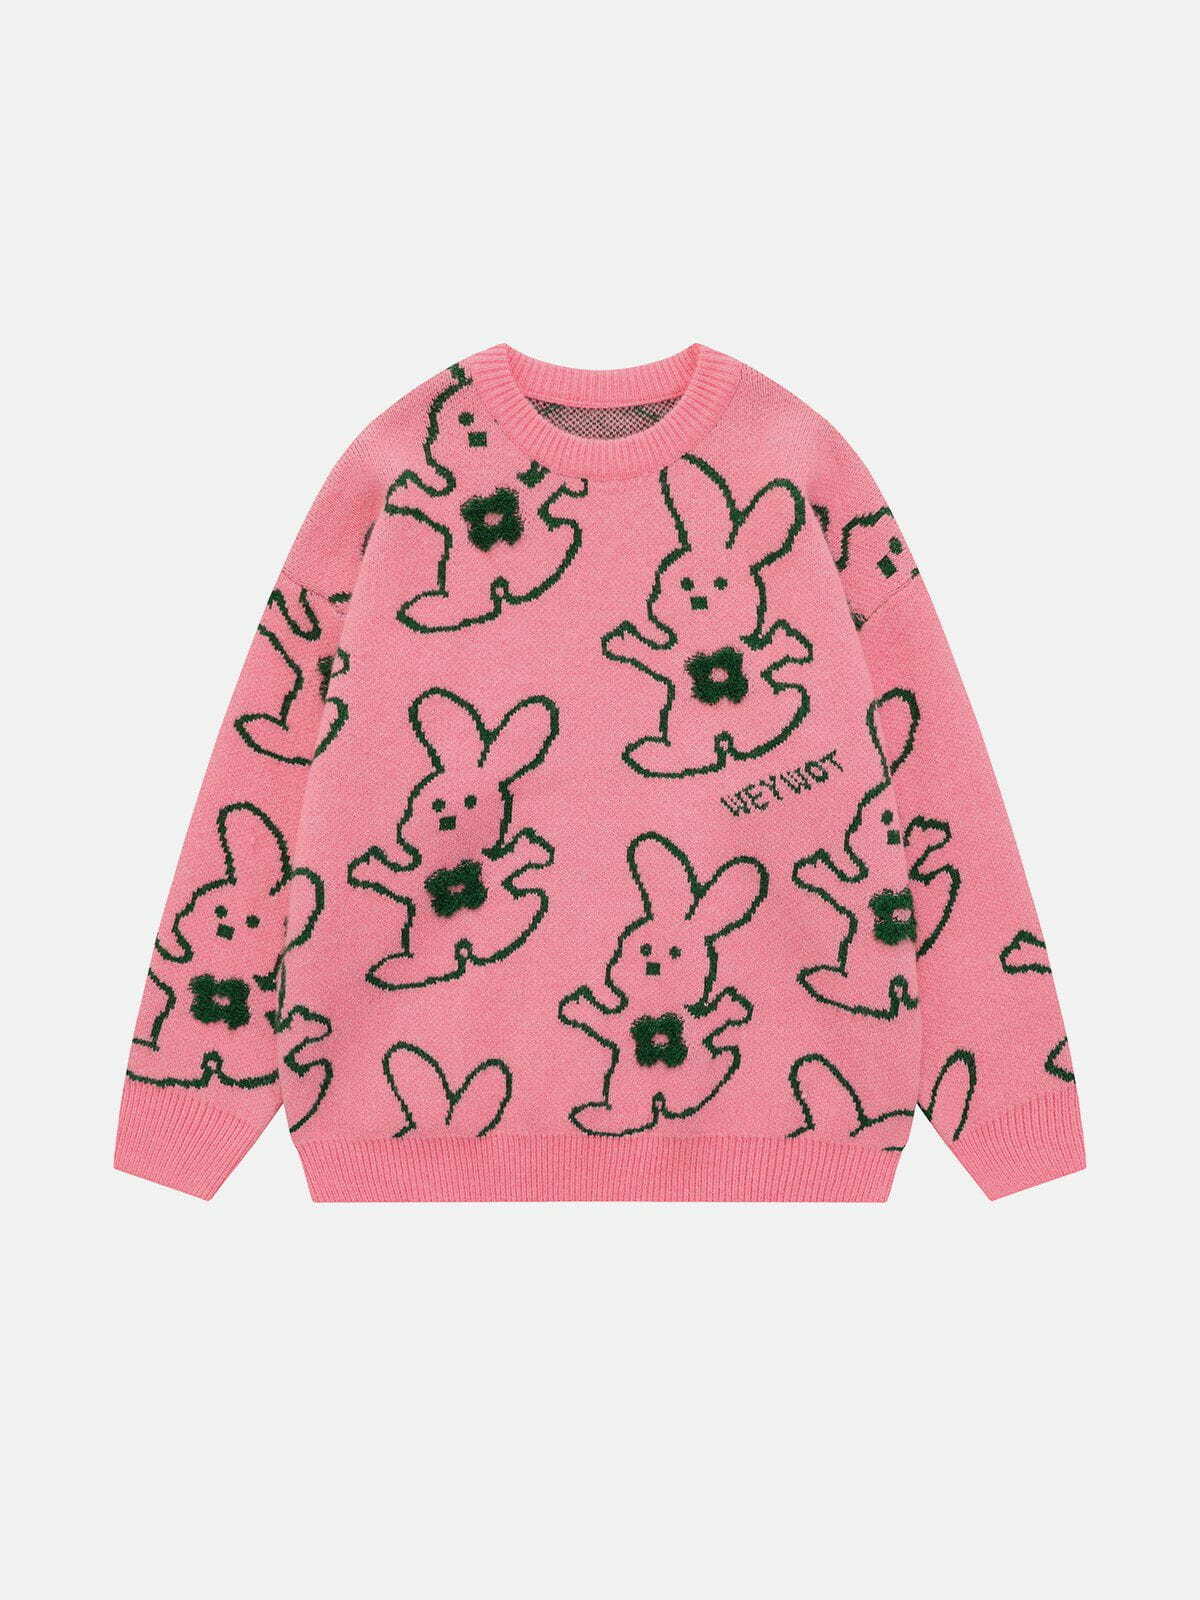 quirky cartoon rabbit sweater cozy & fun y2k fashion 8591